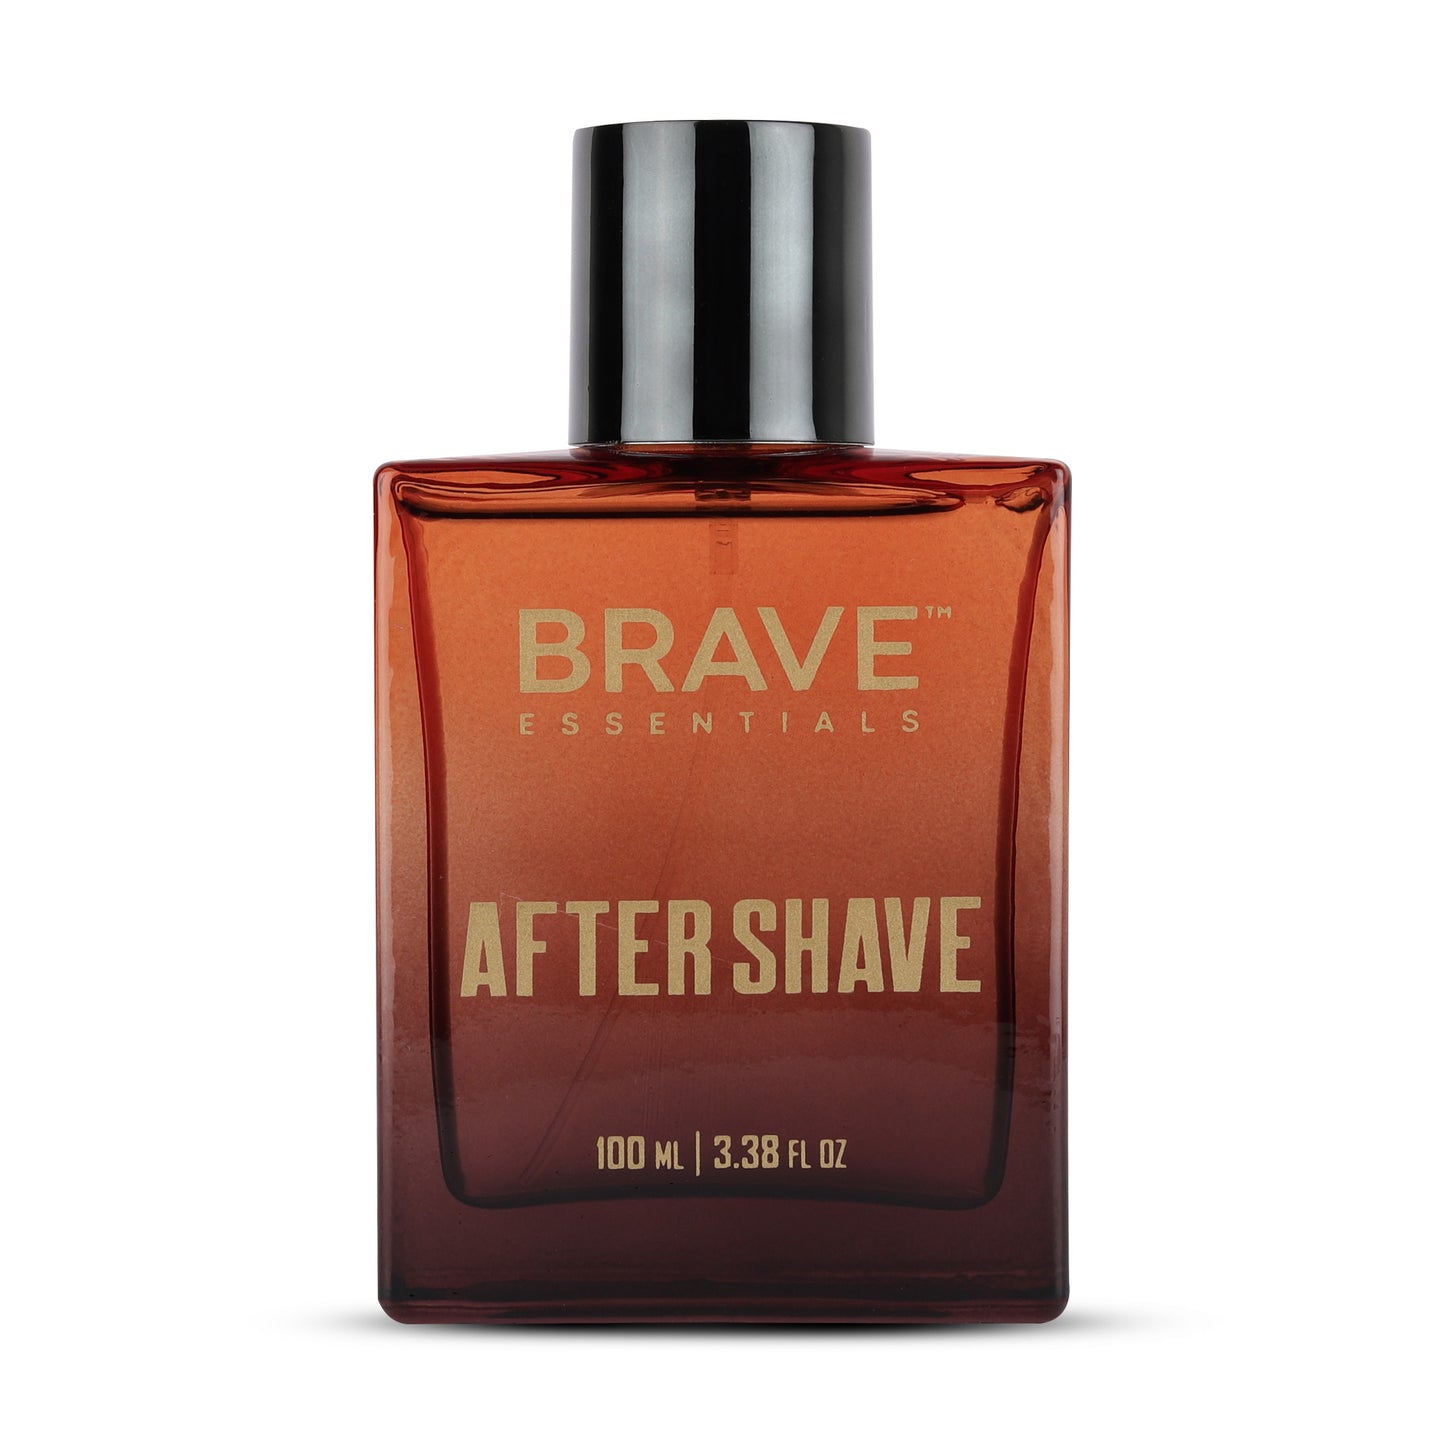 Brave Essentials - After Shave, 100ml